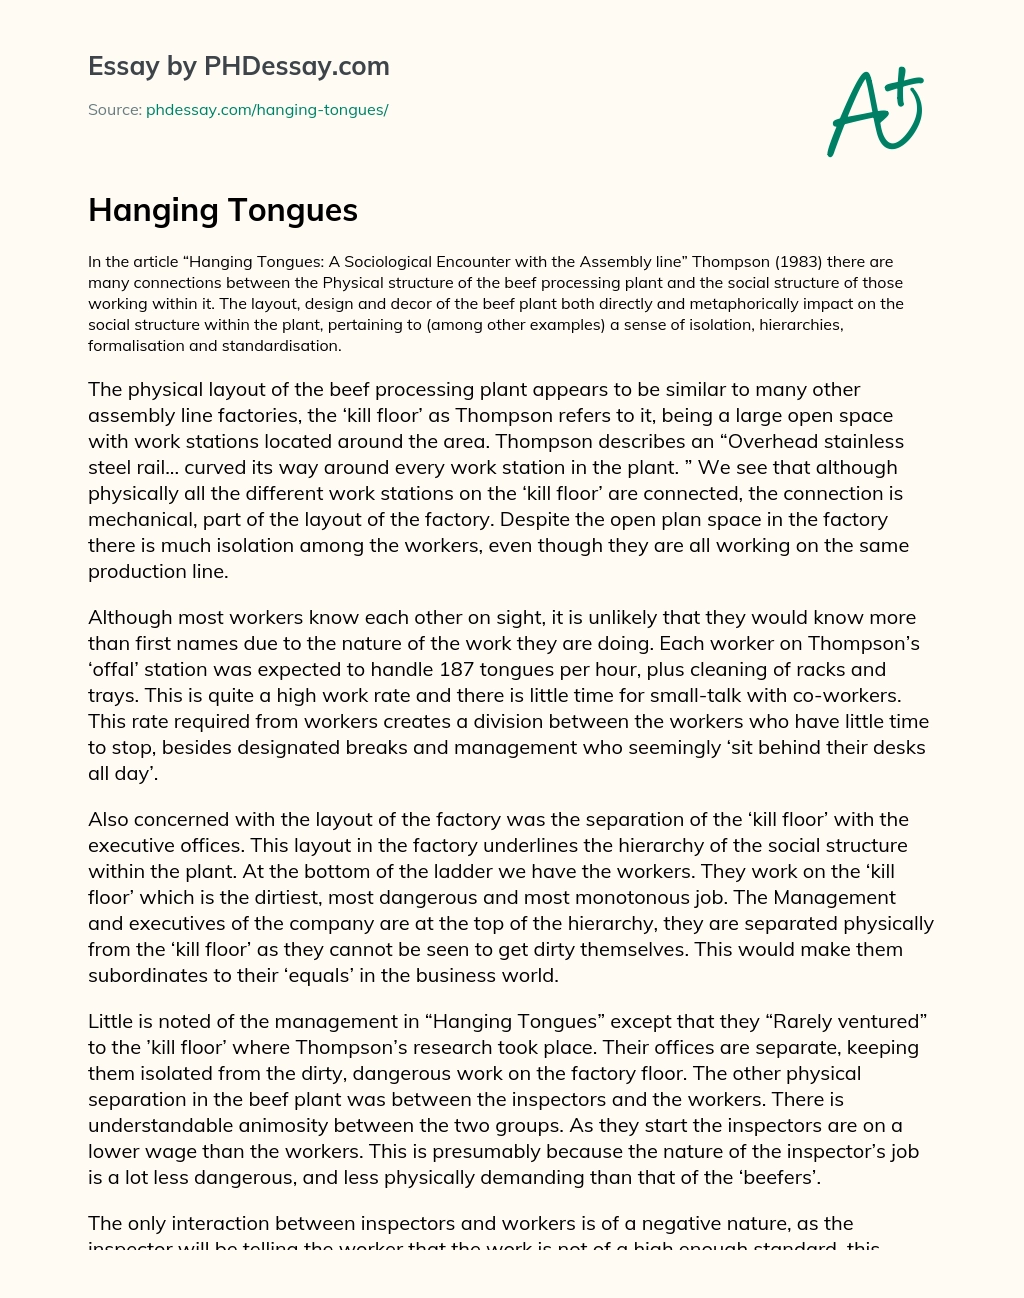 Hanging Tongues essay